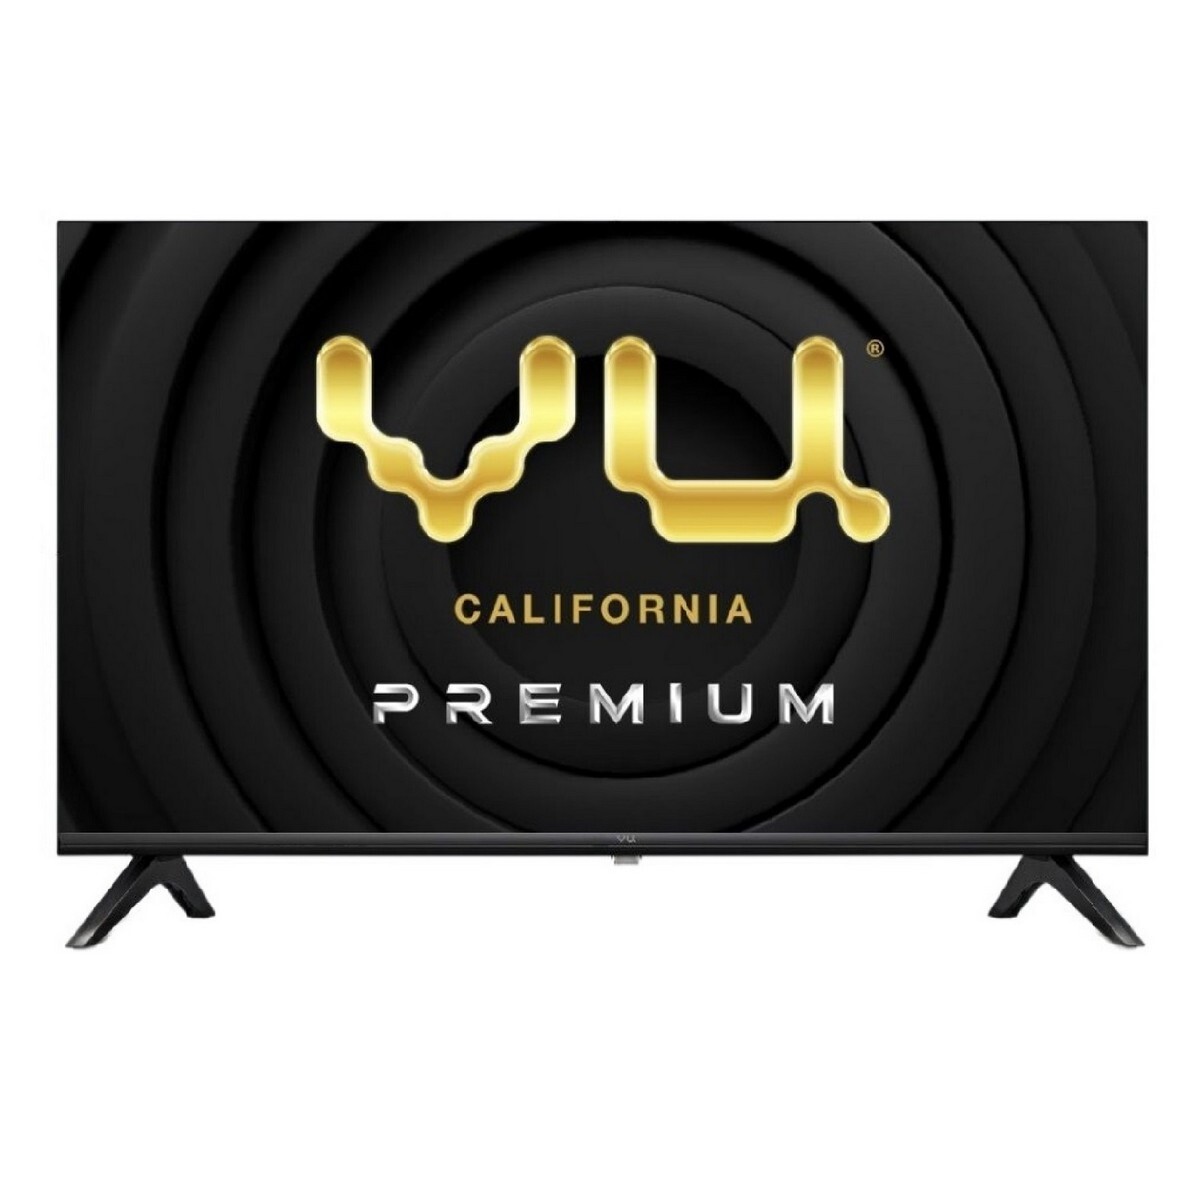 VU Premium Full HD LED Smart TV 43GA 43"